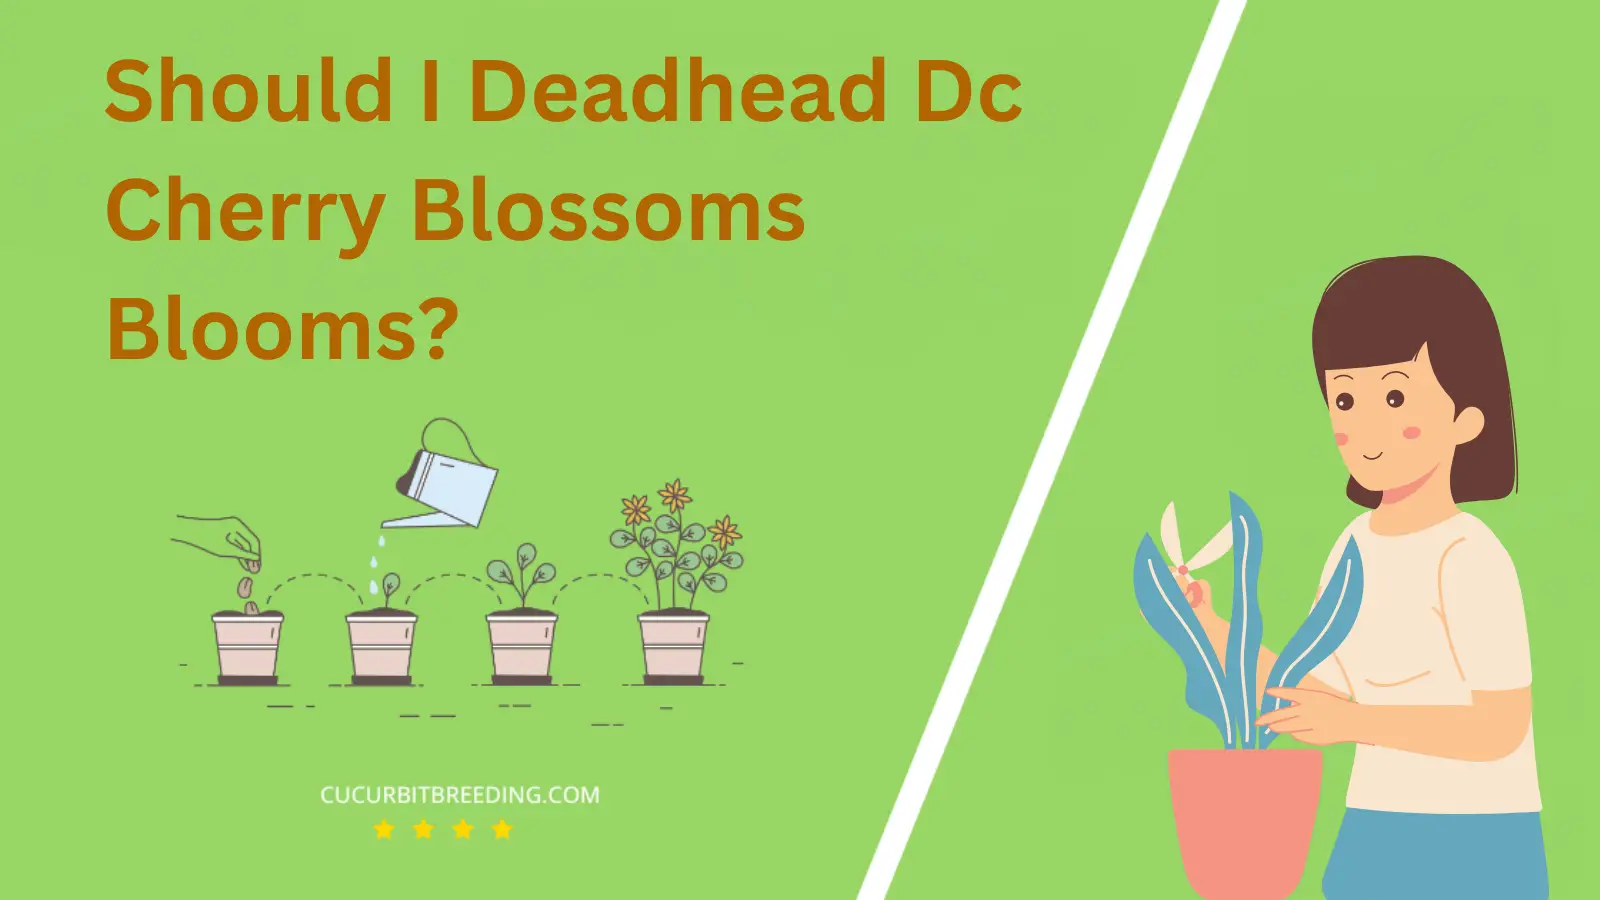 Should I Deadhead Dc Cherry Blossoms Blooms?